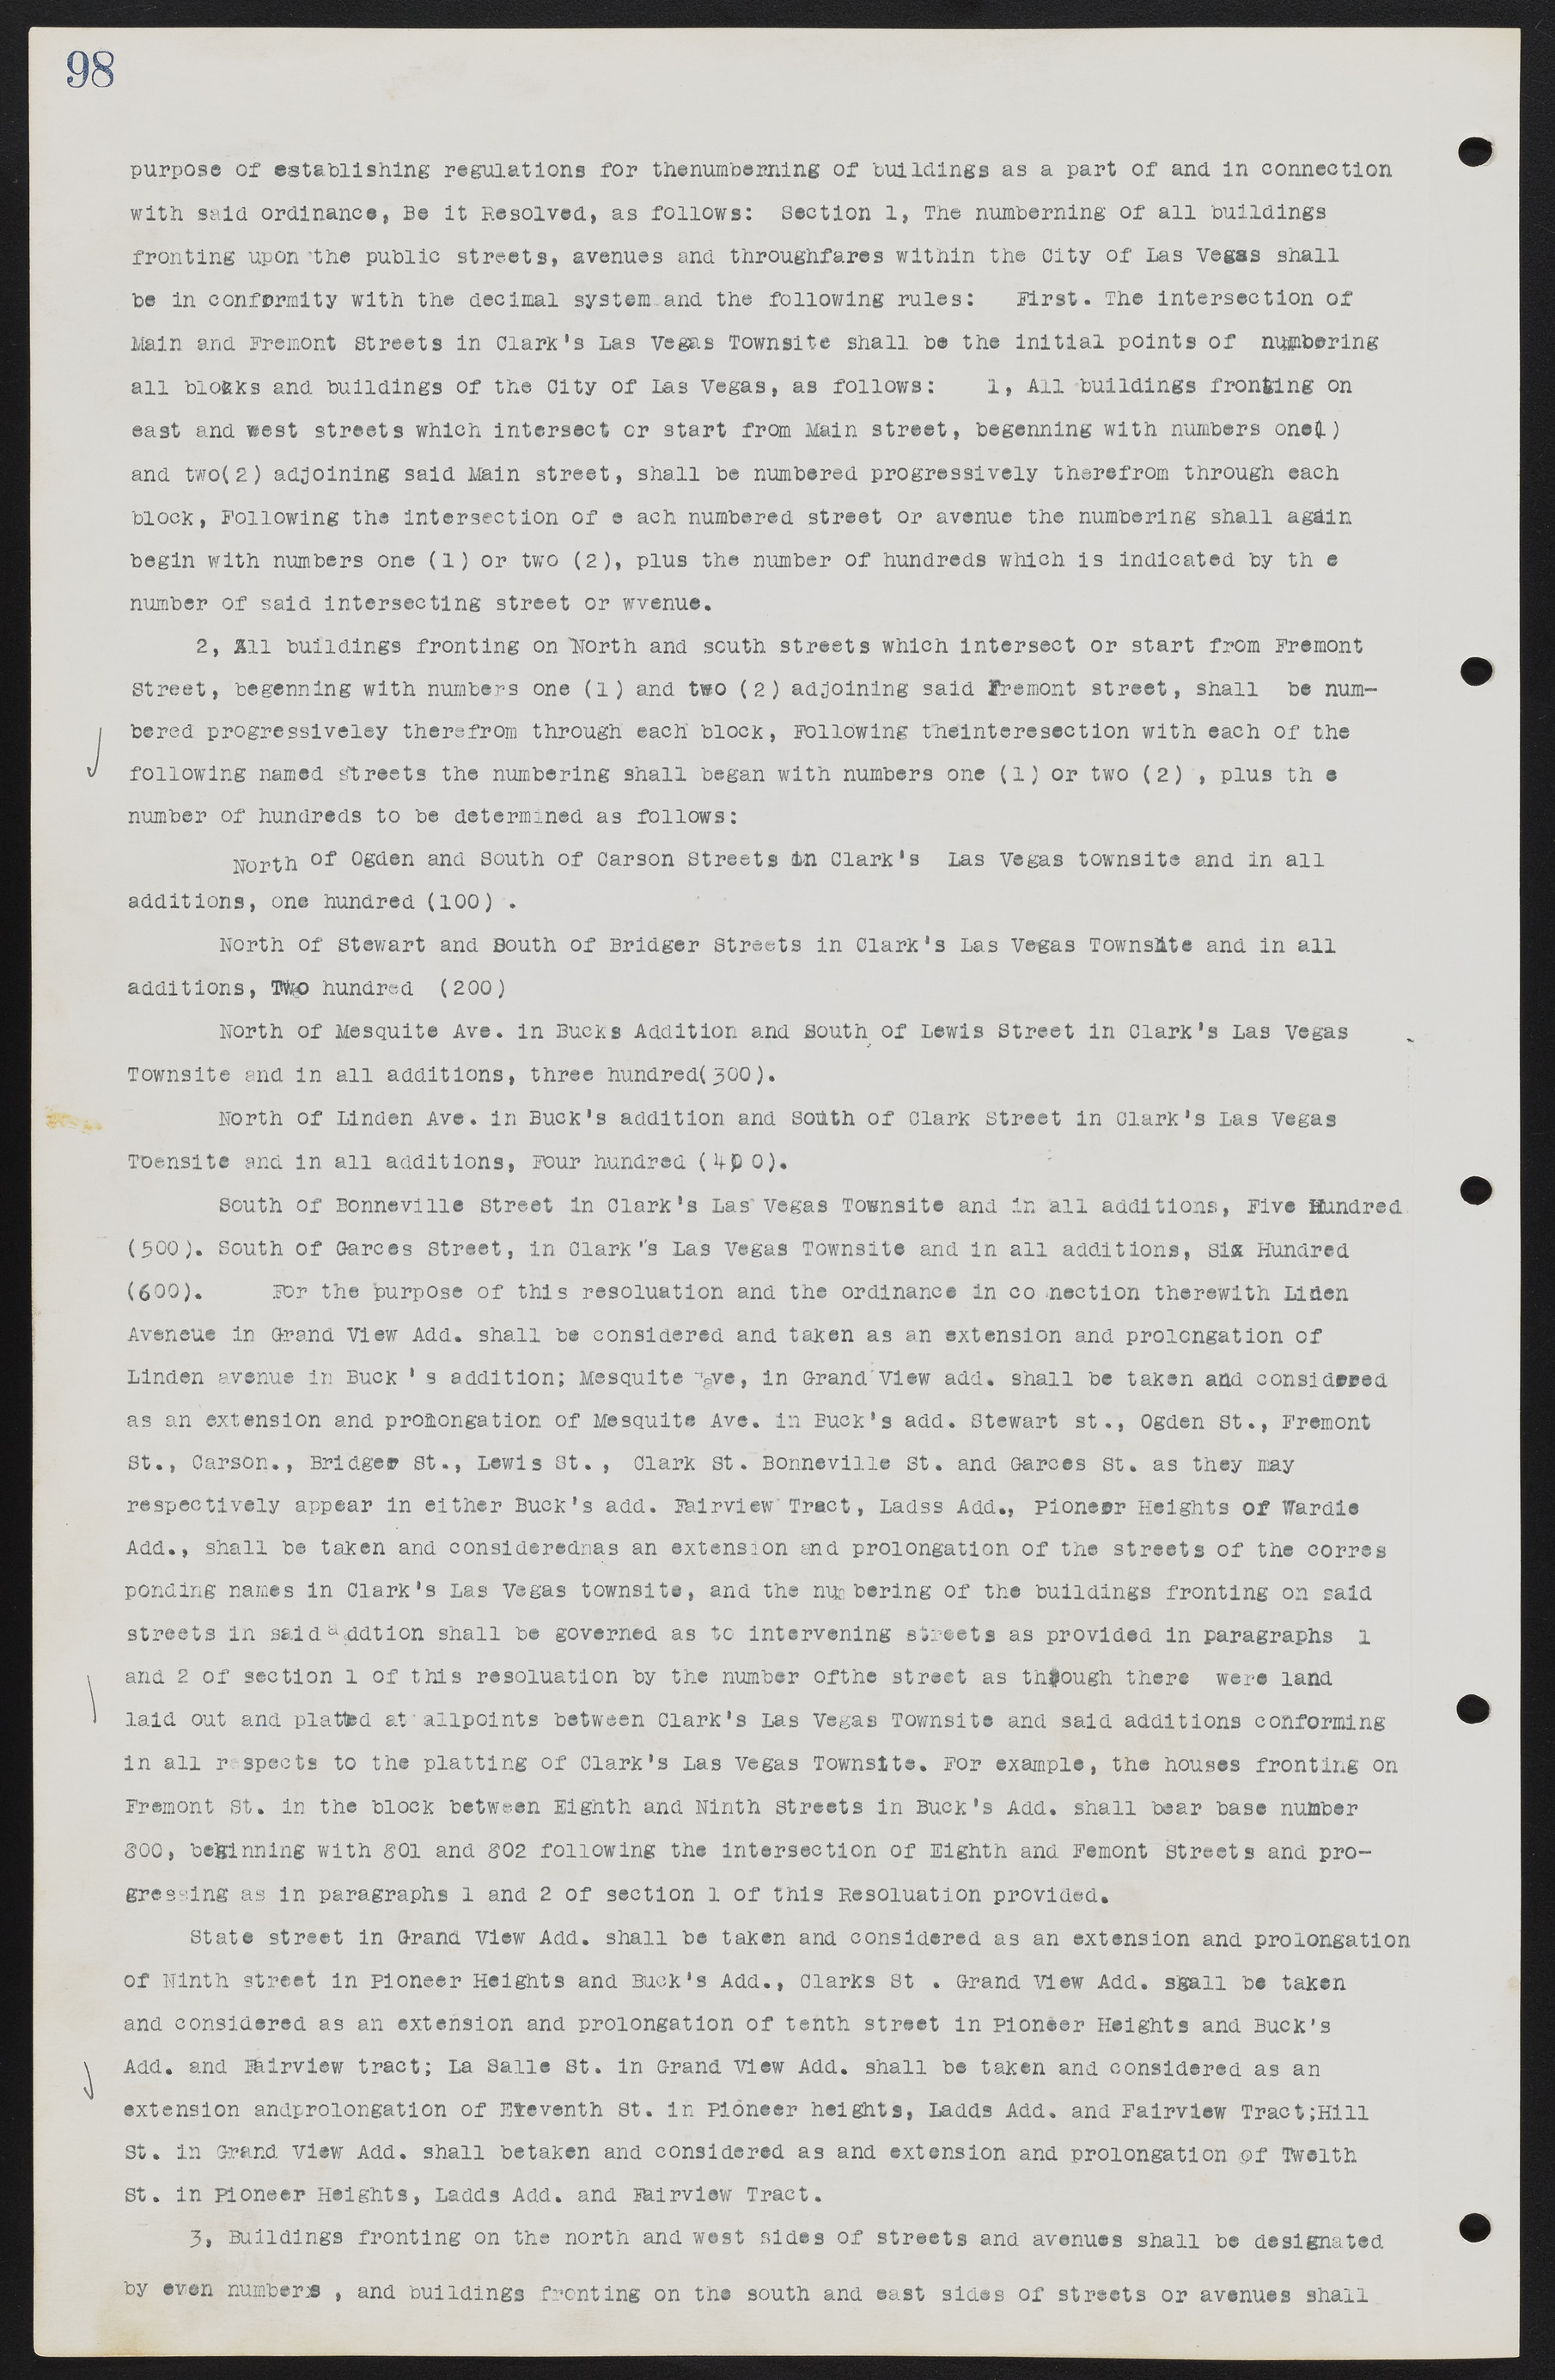 Las Vegas City Commission Minutes, June 22, 1911 to February 7, 1922, lvc000001-112